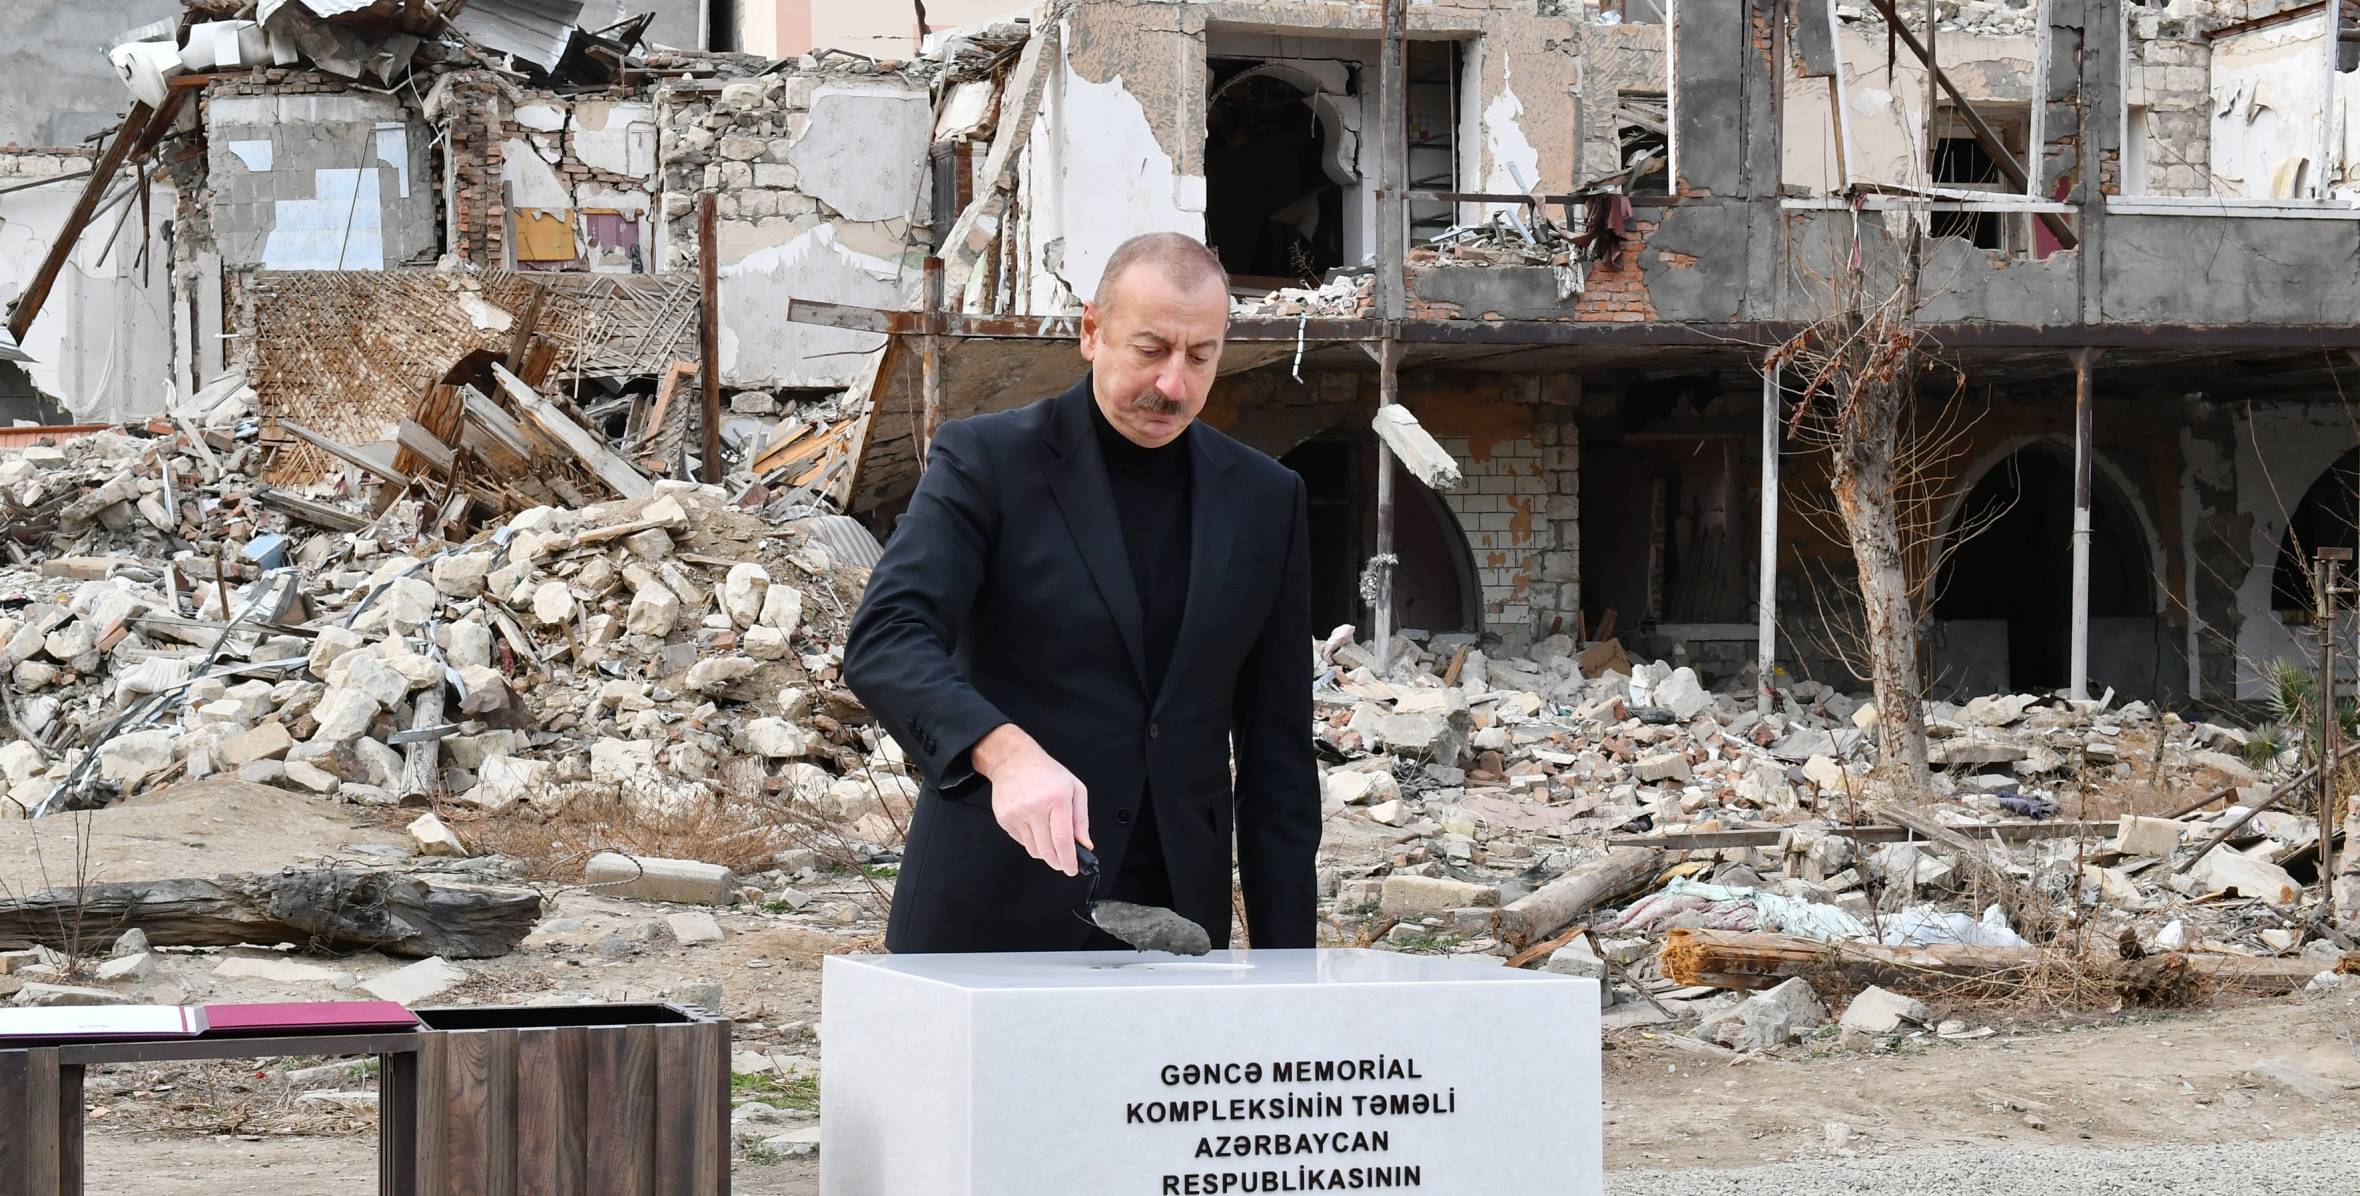 Ilham Aliyev laid the foundation stone for Gandja Memorial Complex